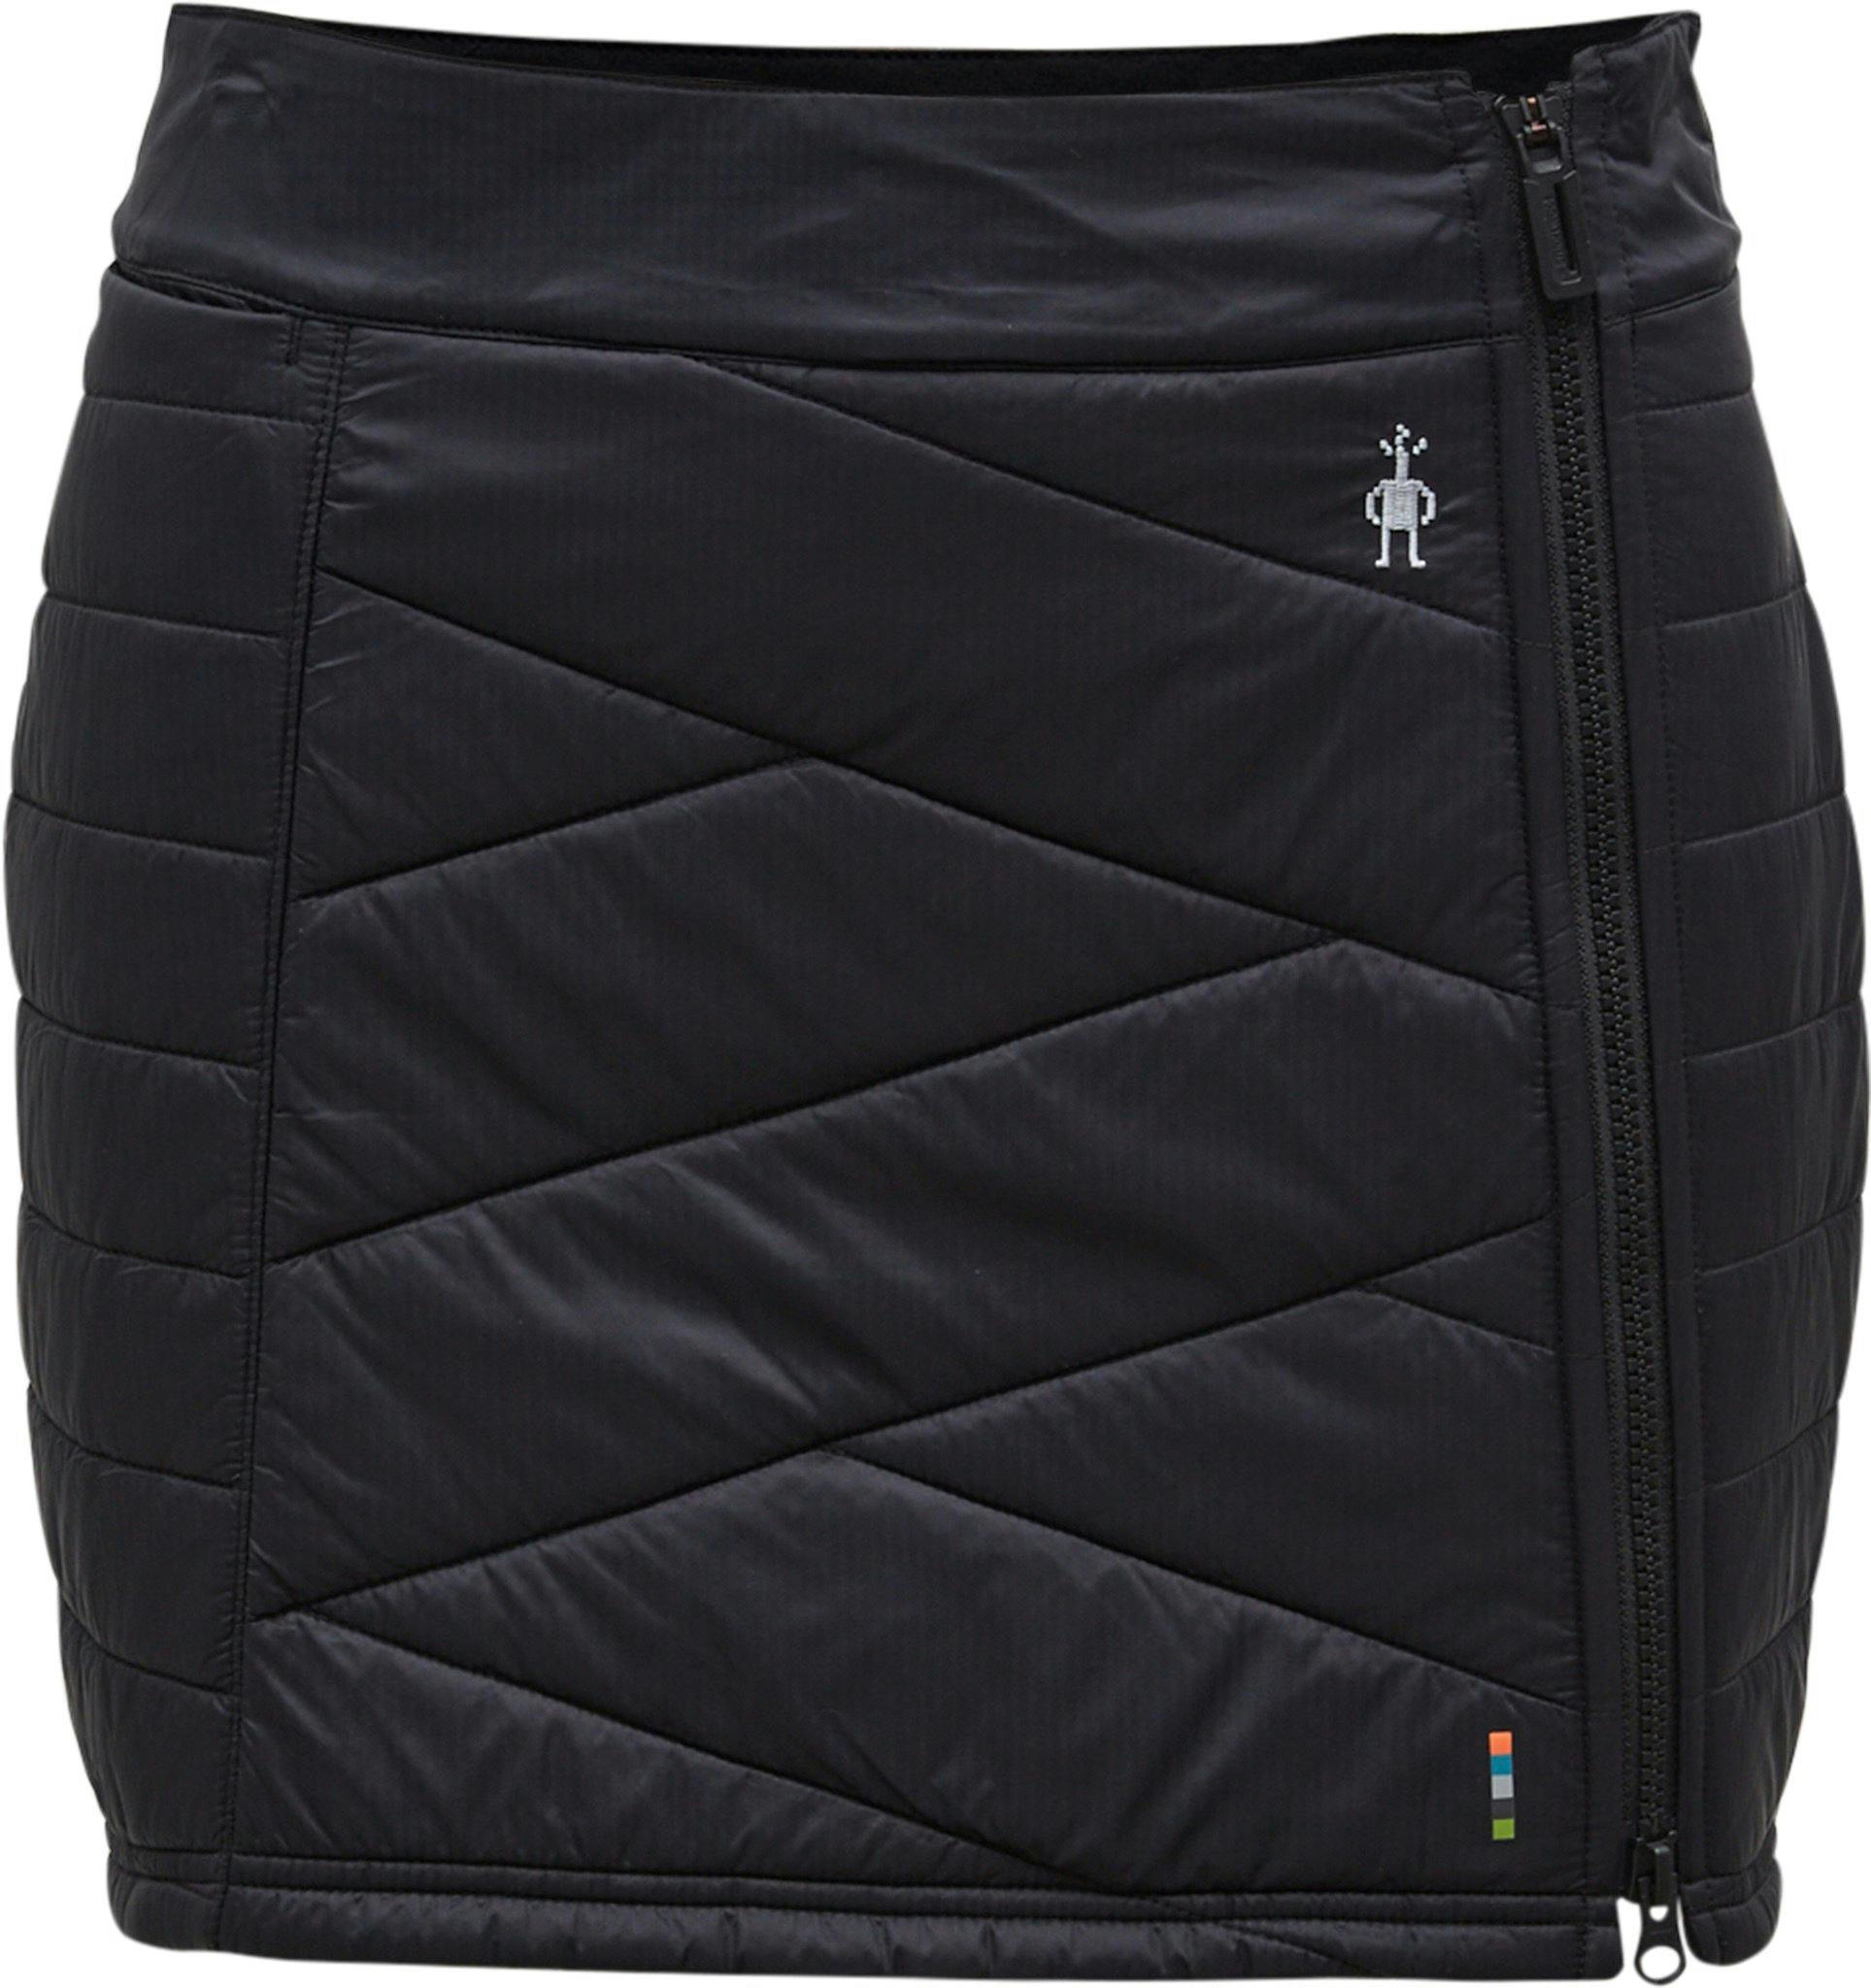 Product image for Smartloft Zip Skirt - Women's